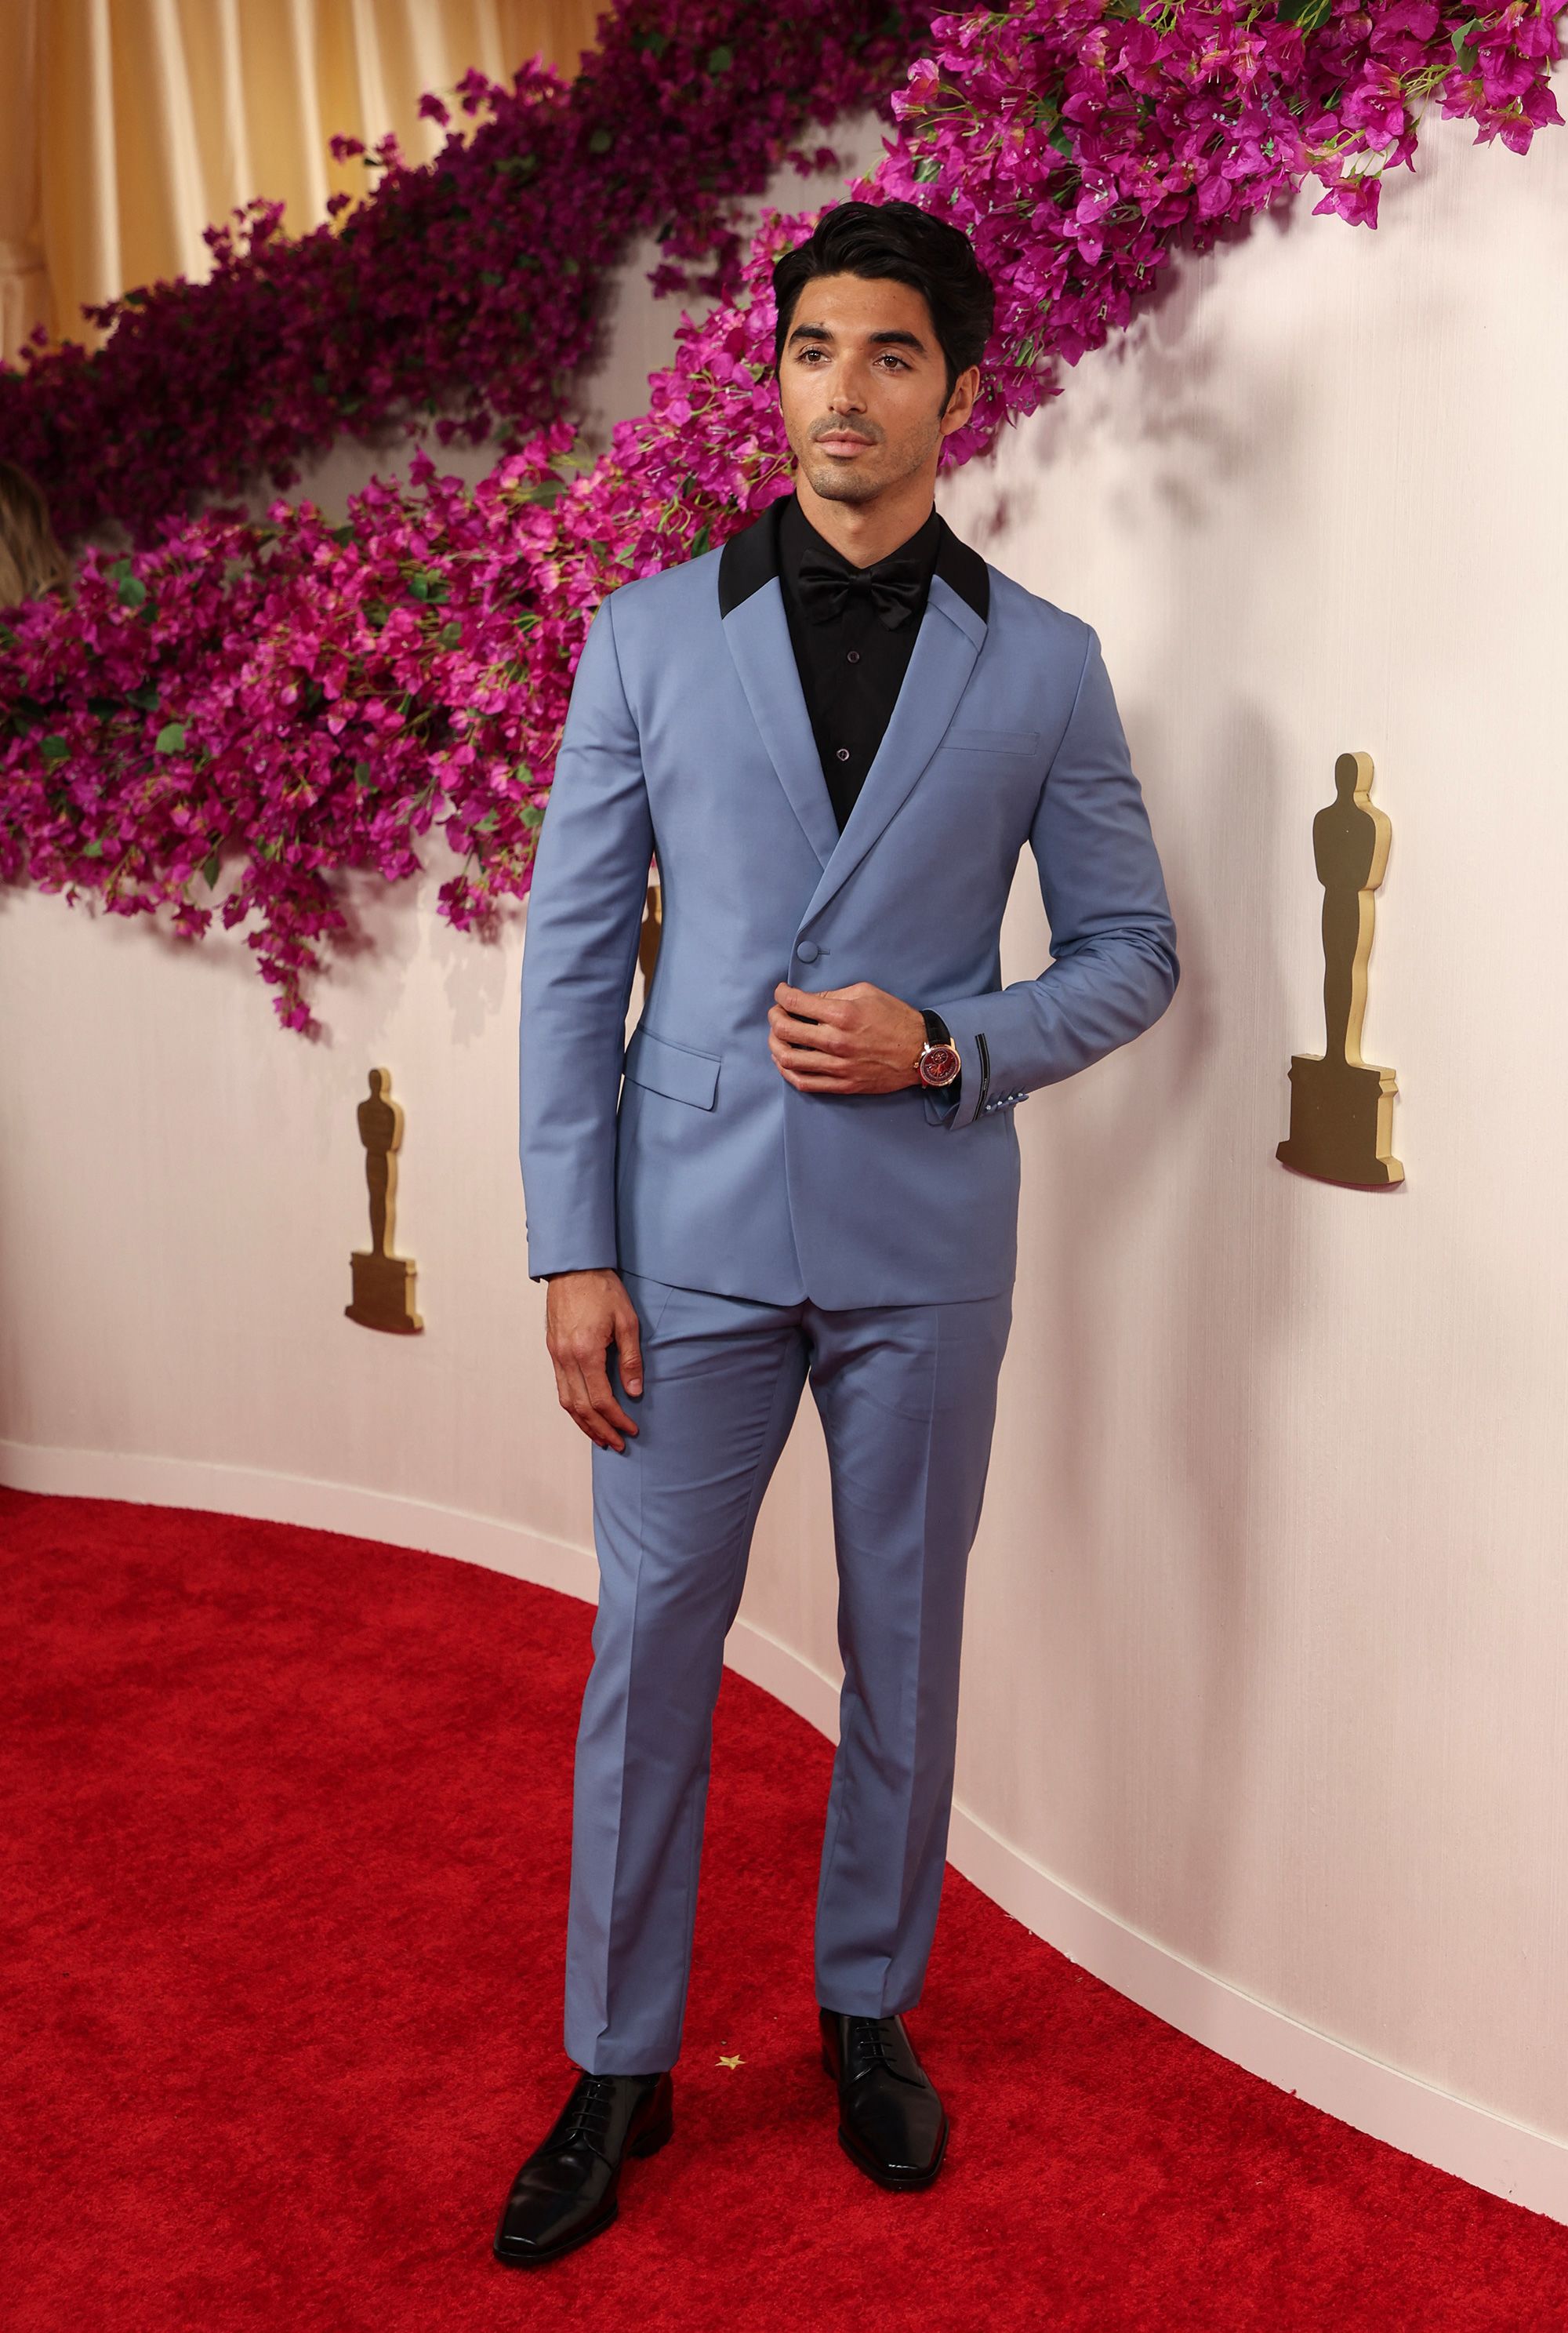 Taylor Zakhar Perez popped on the red carpet with a blue Prada suit styled by leading celebrity stylist Jason Bolden.